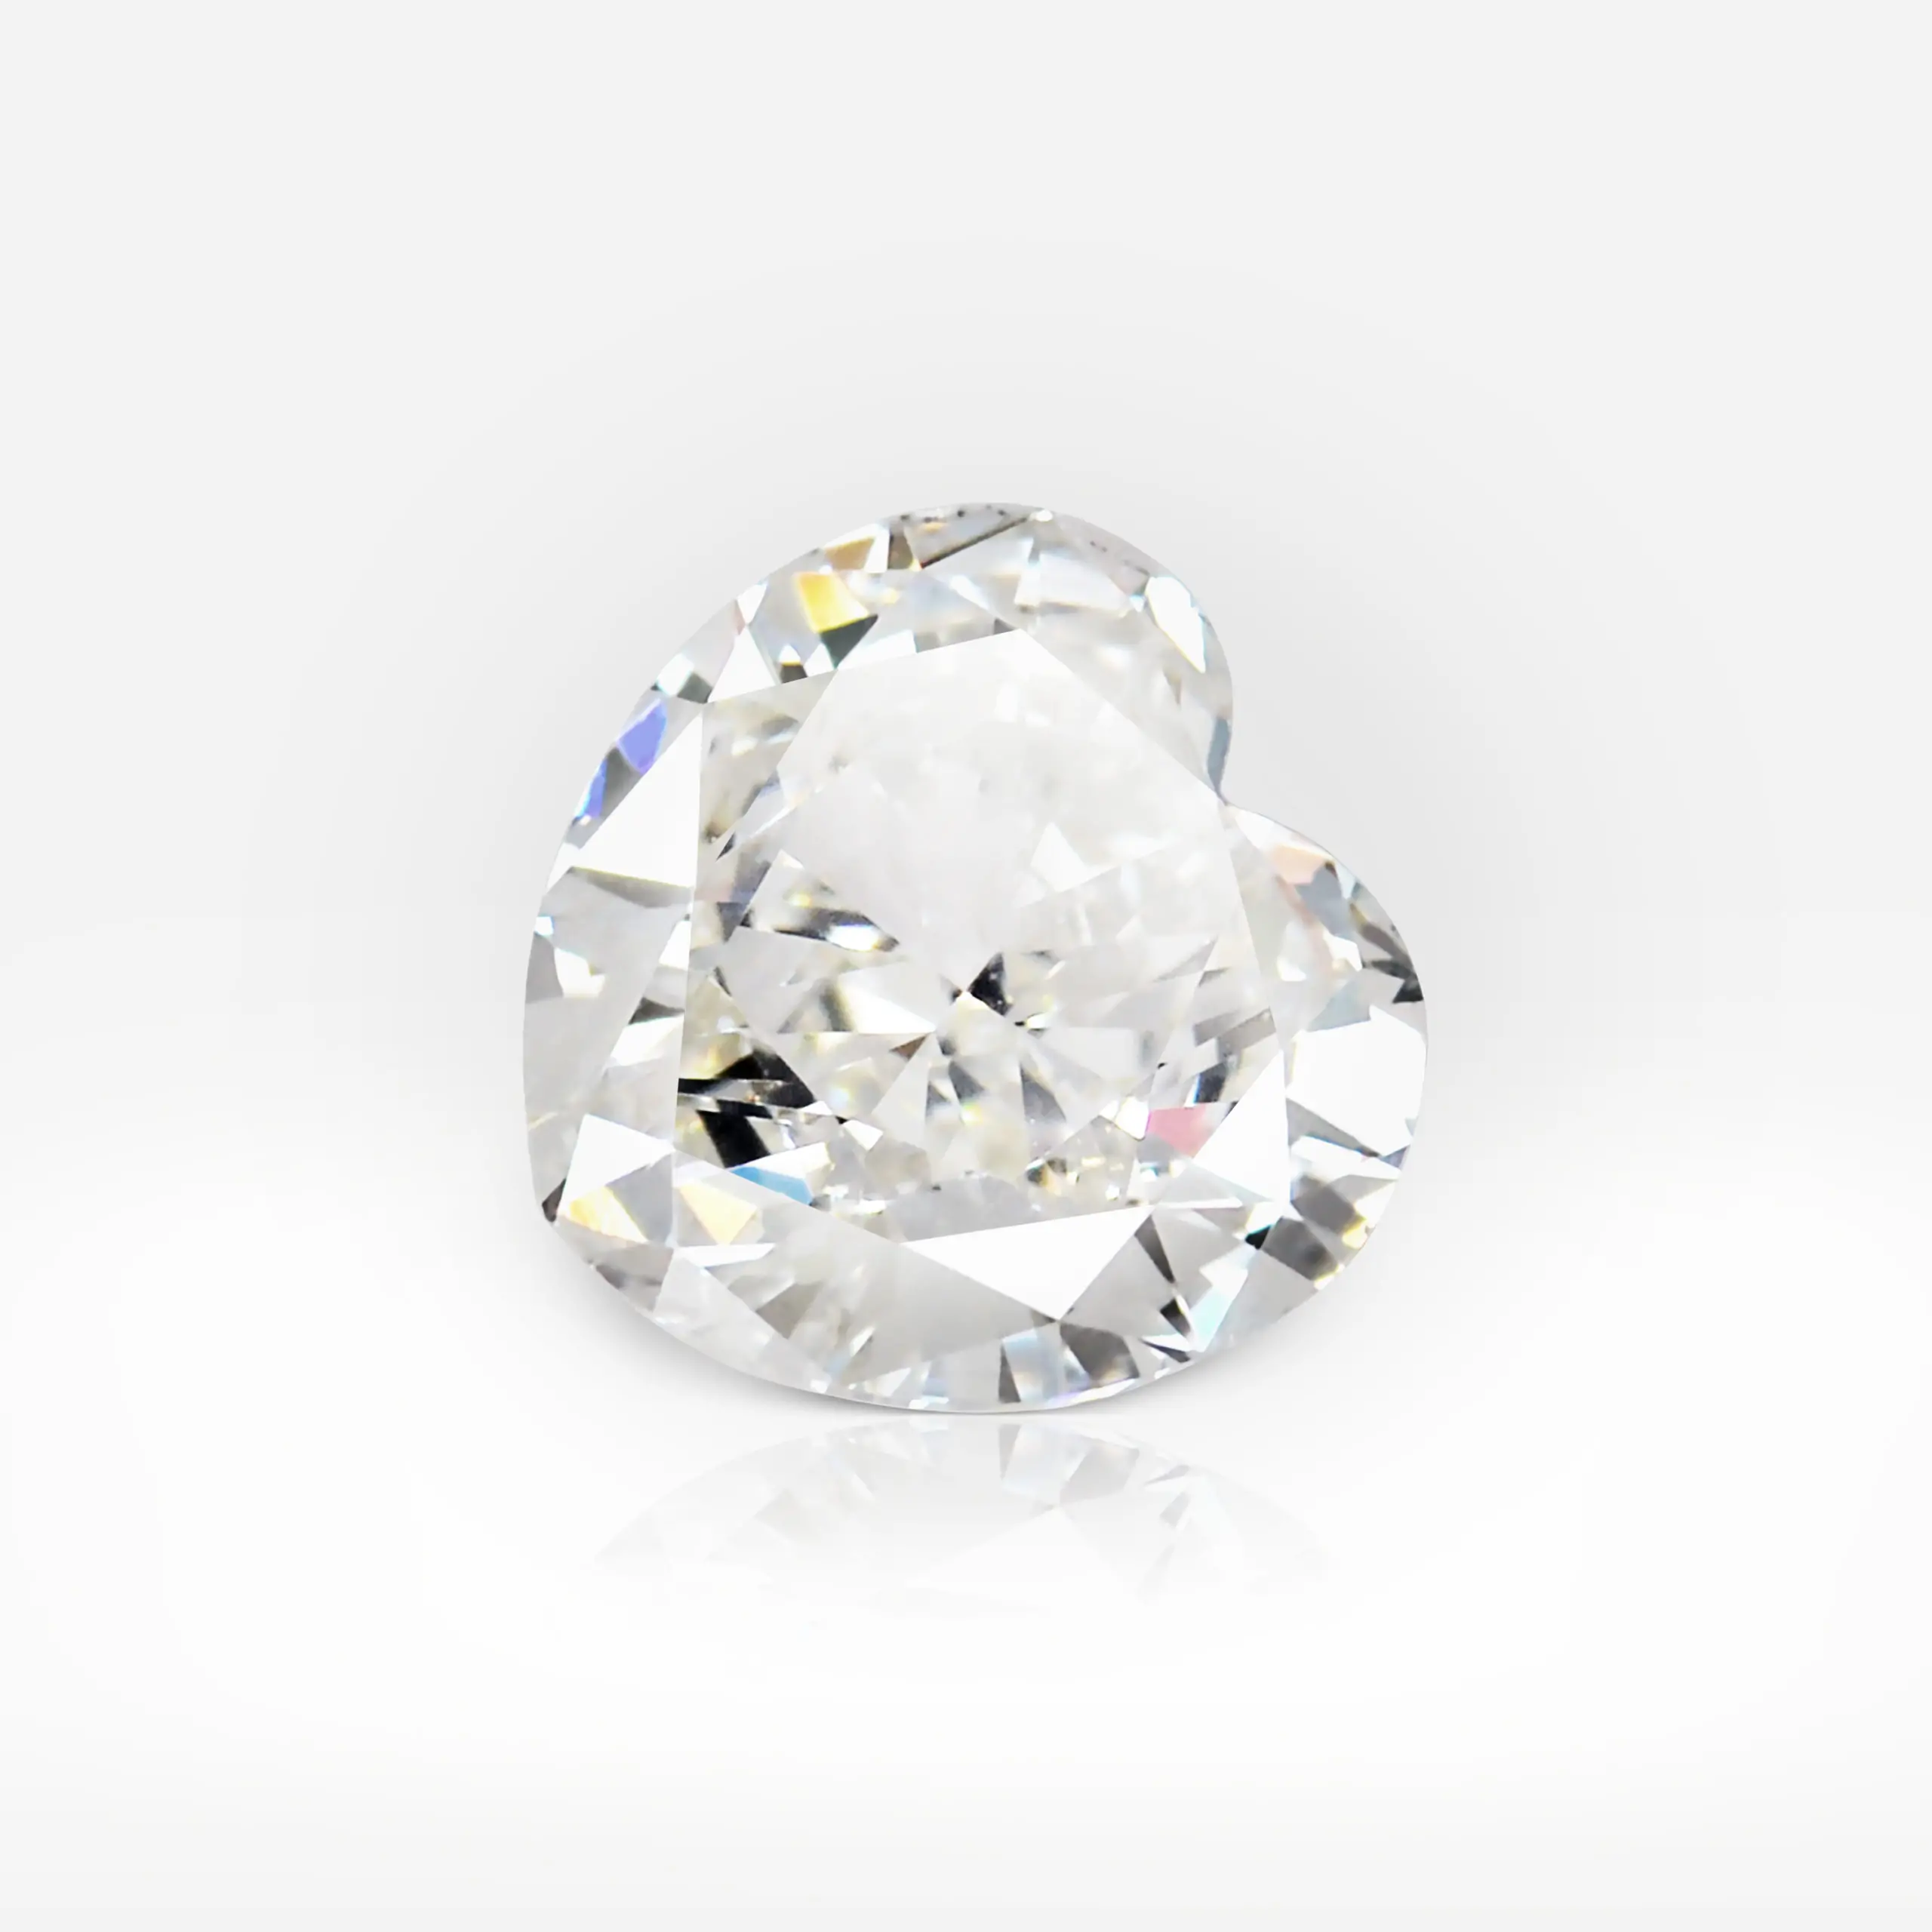 1.01 carat G SI1 Heart Shape Diamond HRD - picture 1